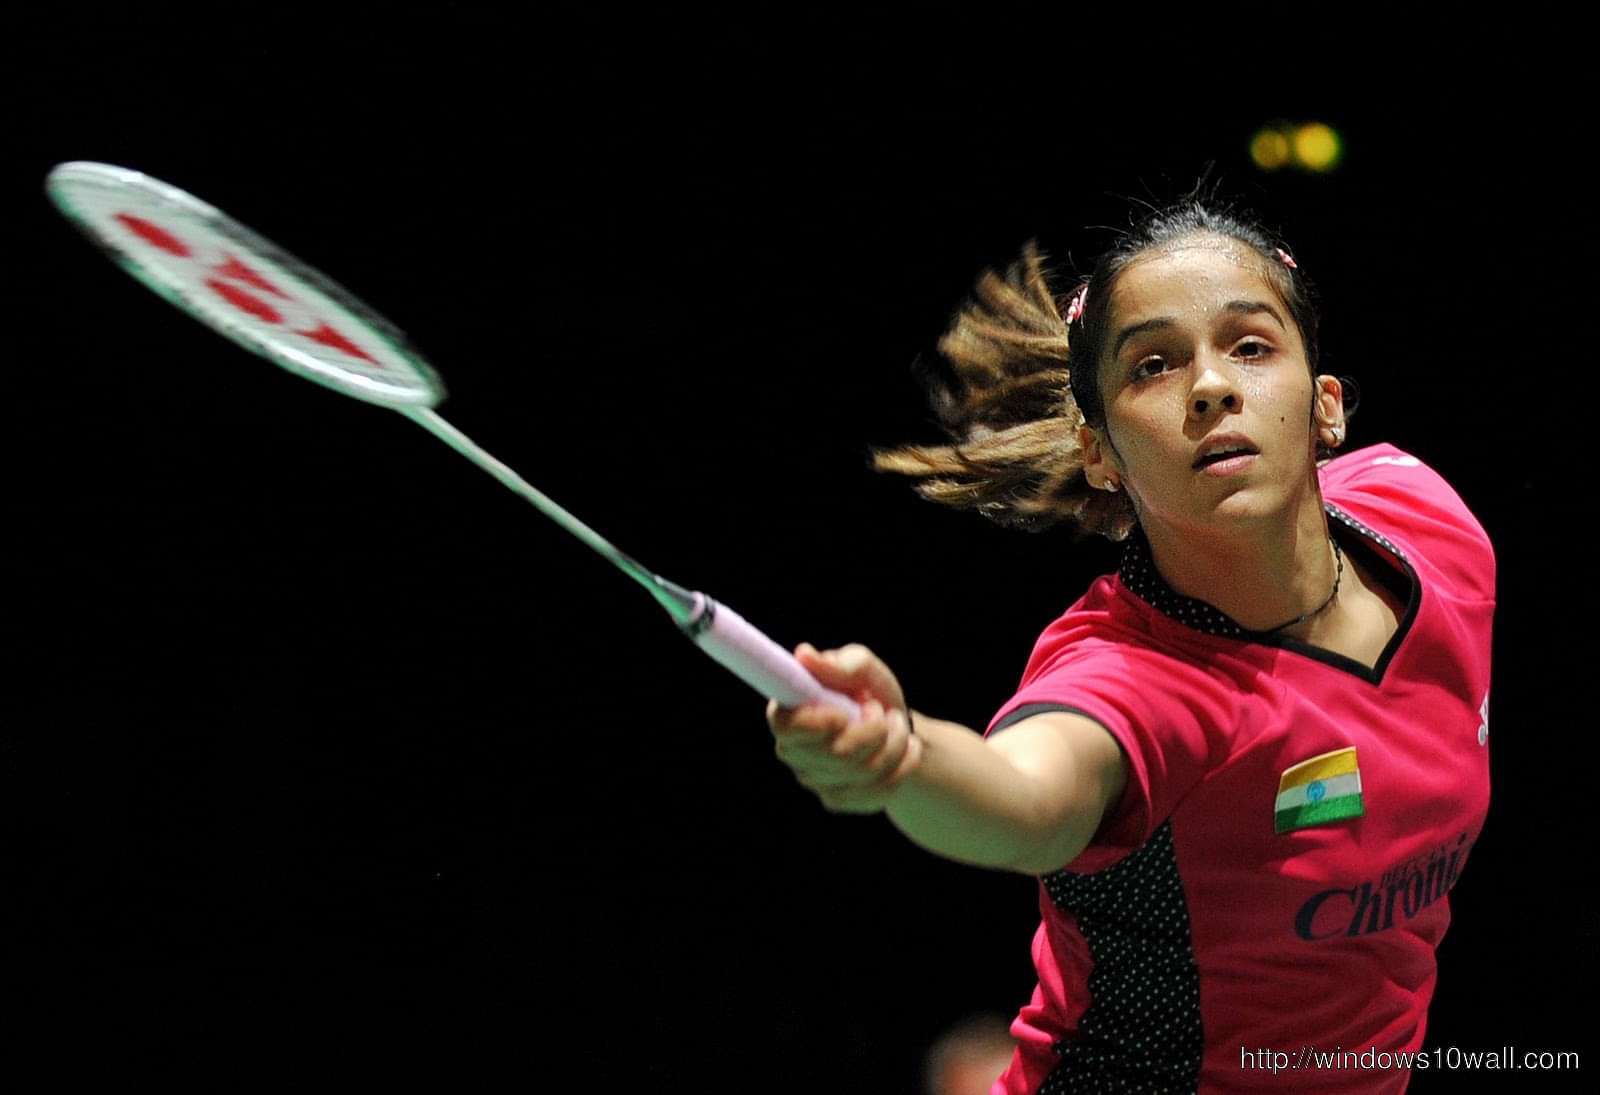 Saina Nehwal lost to World No. 226 Zhang Yiman in the women's singles quarter-finals of the Macau Open badminton tournament